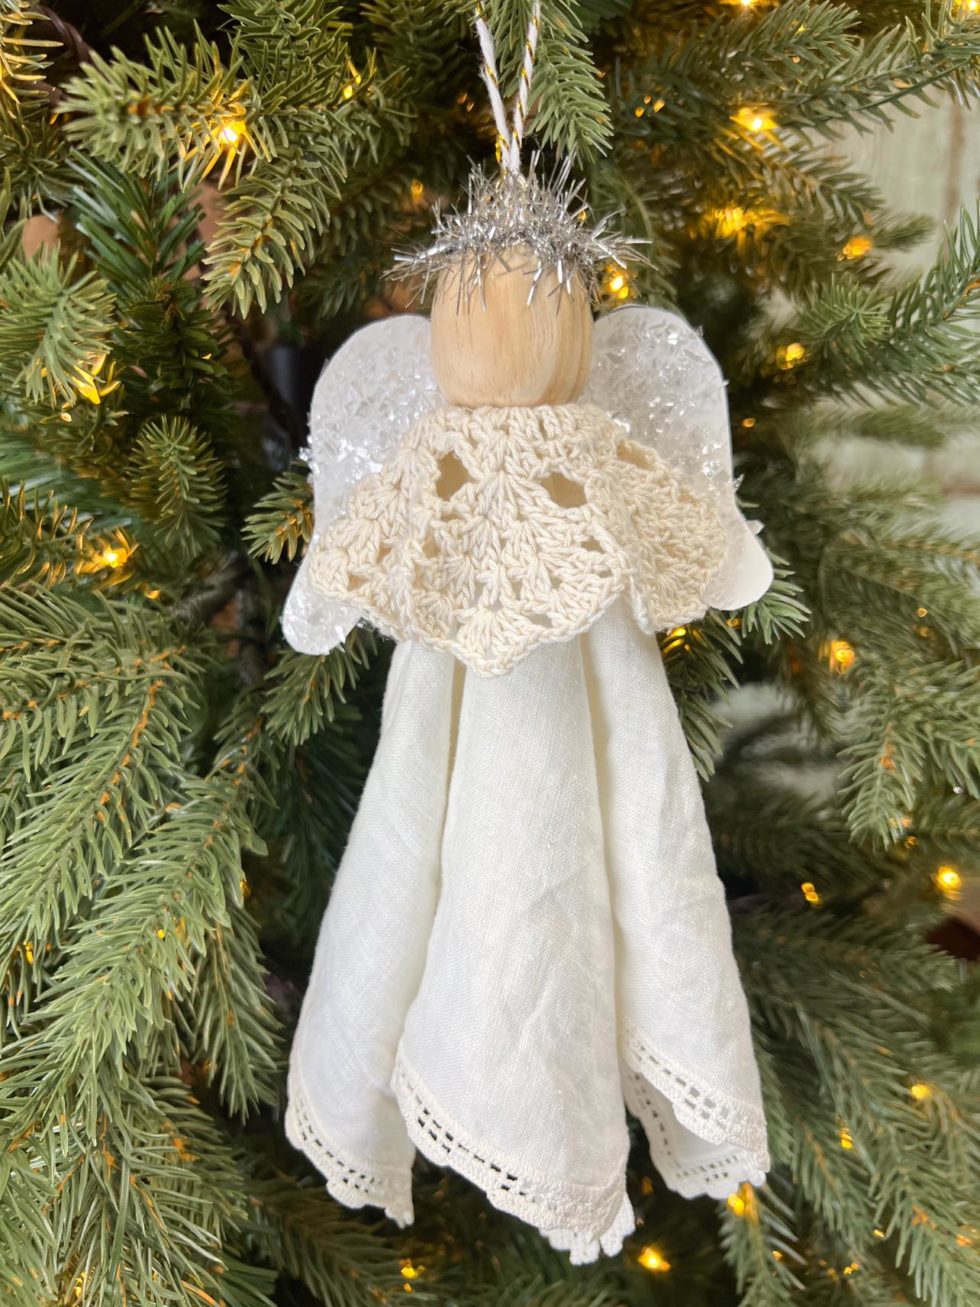 DIY Angel Using Target Wood Ornaments - The Shabby Tree